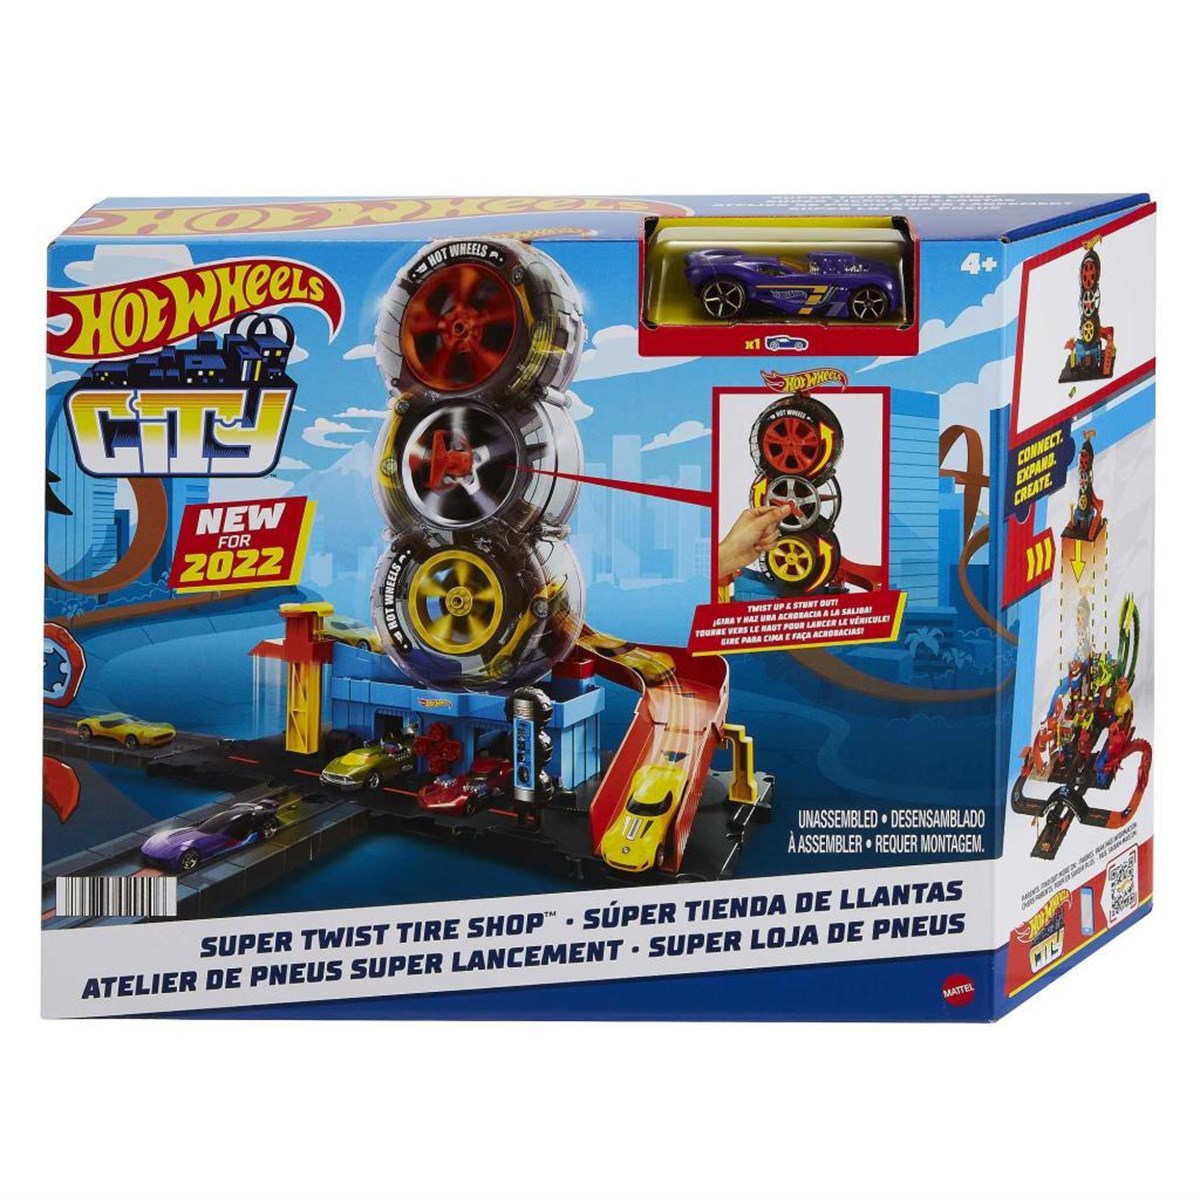 Hot Wheels City Tekerlek Kulesi Oyun Seti HDP02 | Toysall